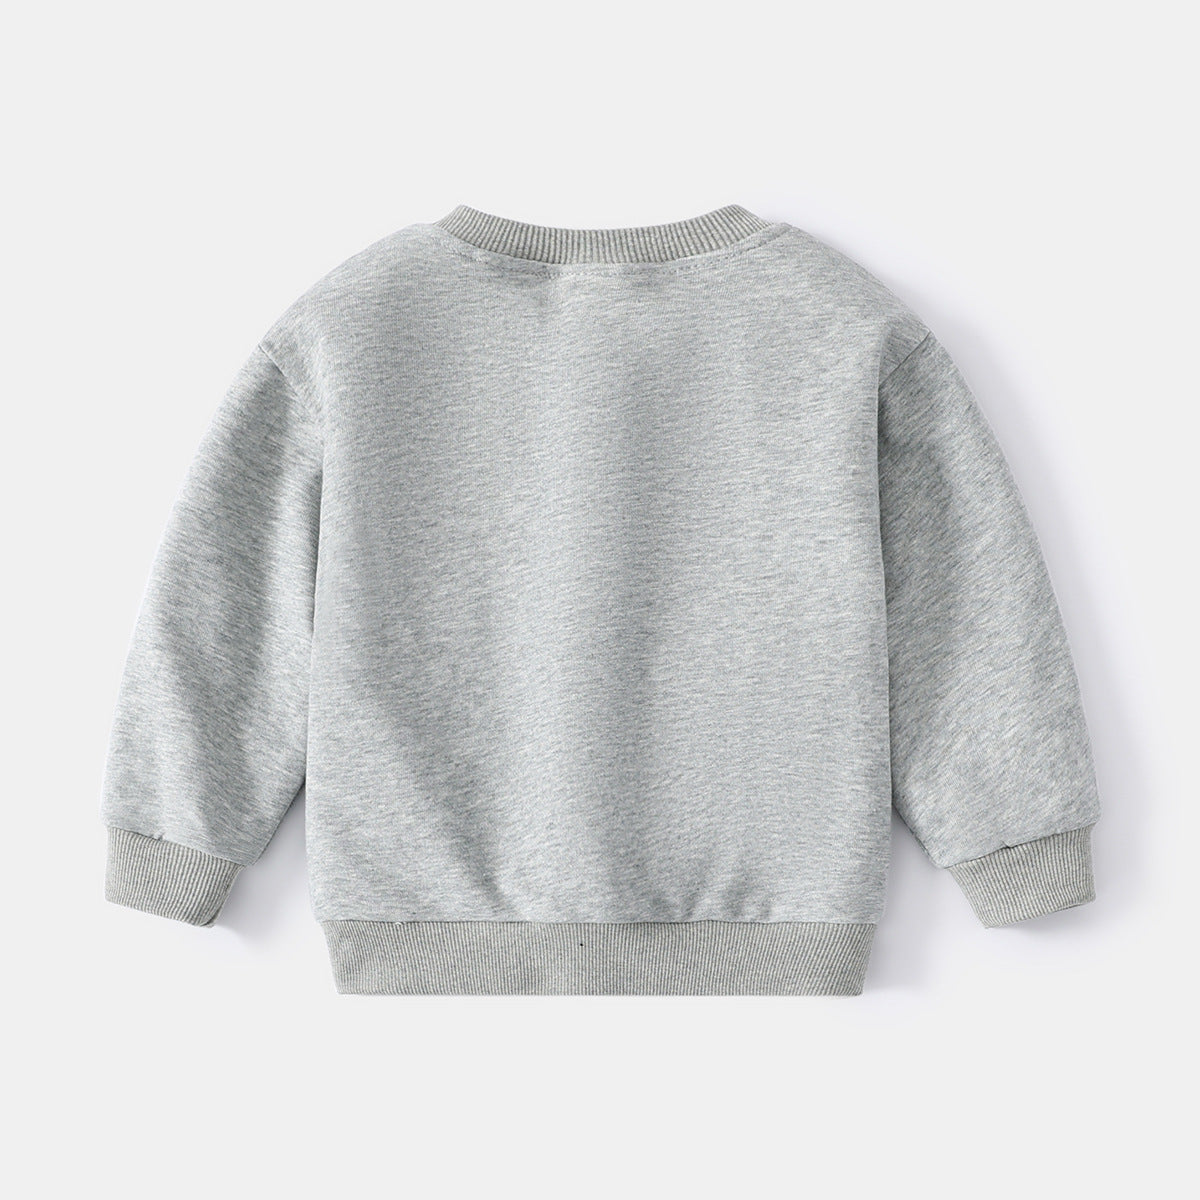 [513557] - Atasan Sweater Kantong Lengan Panjang Anak Laki-laki - Motif Plain Vest